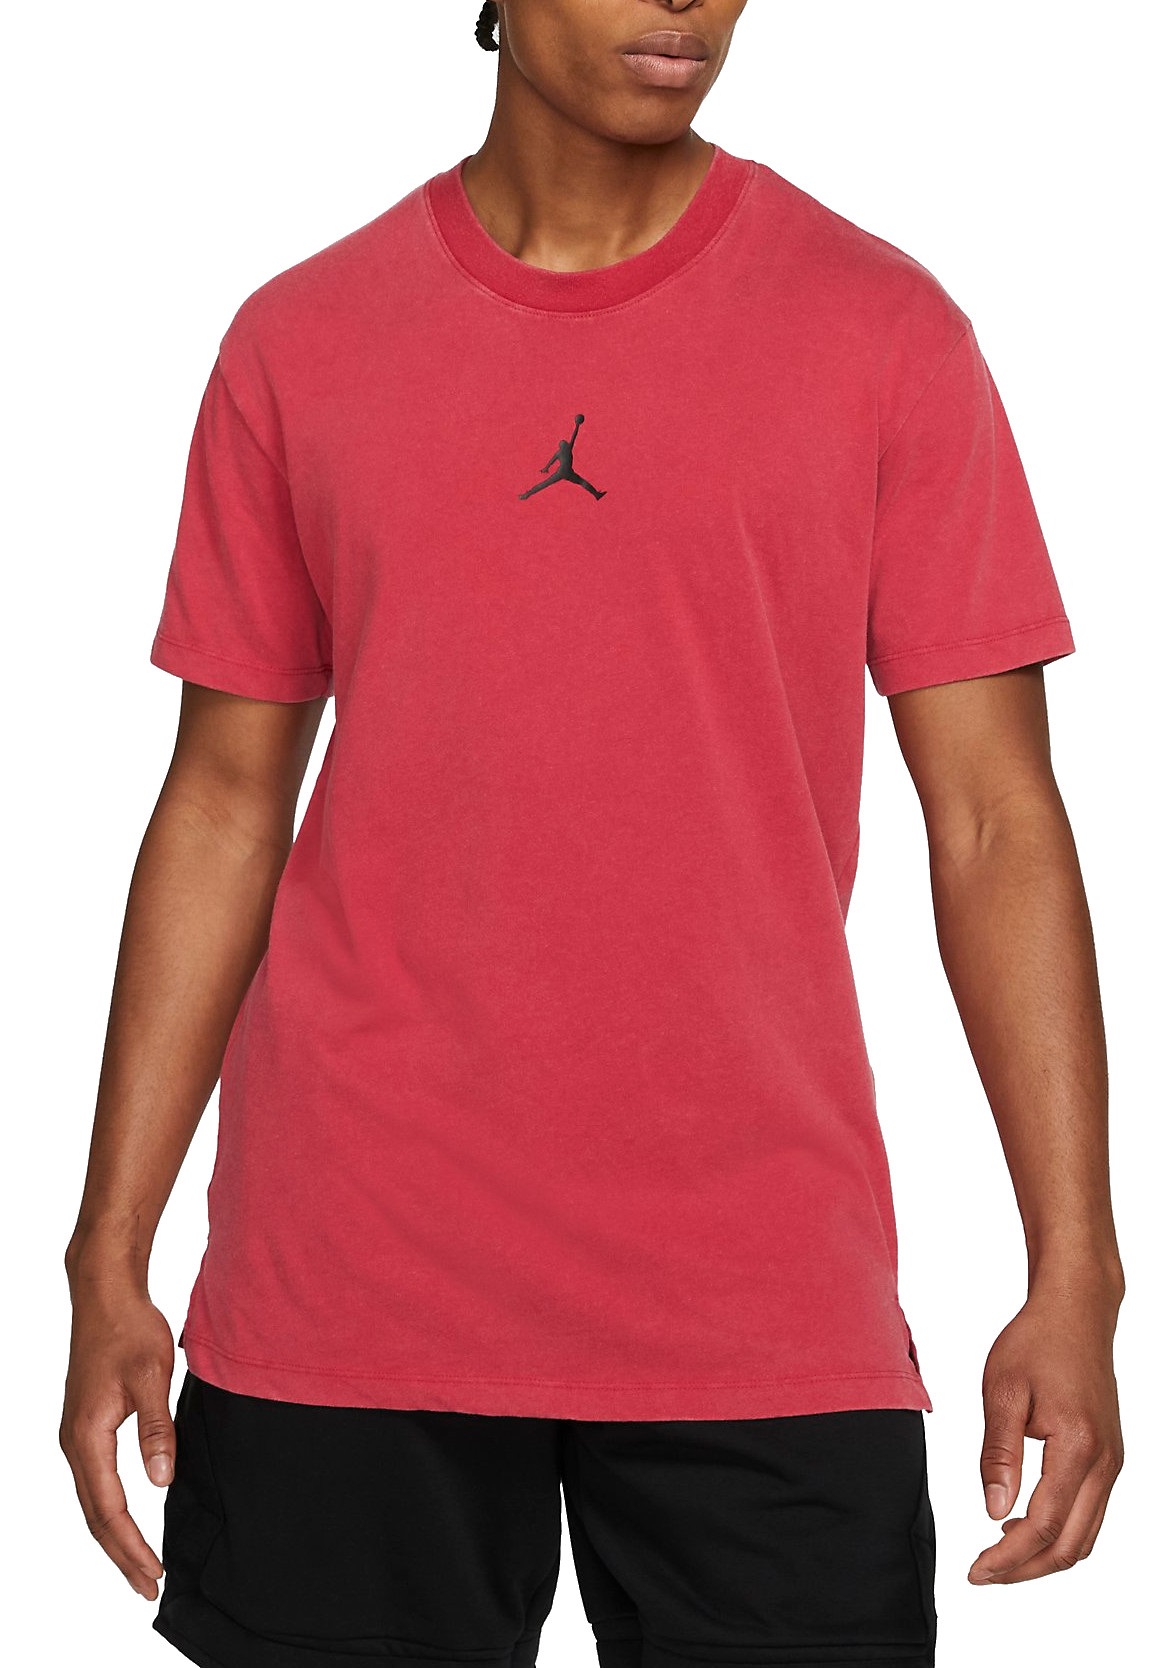 Jordan Dri-FIT Air Men s Short-Sleeve Graphic Top Rövid ujjú póló